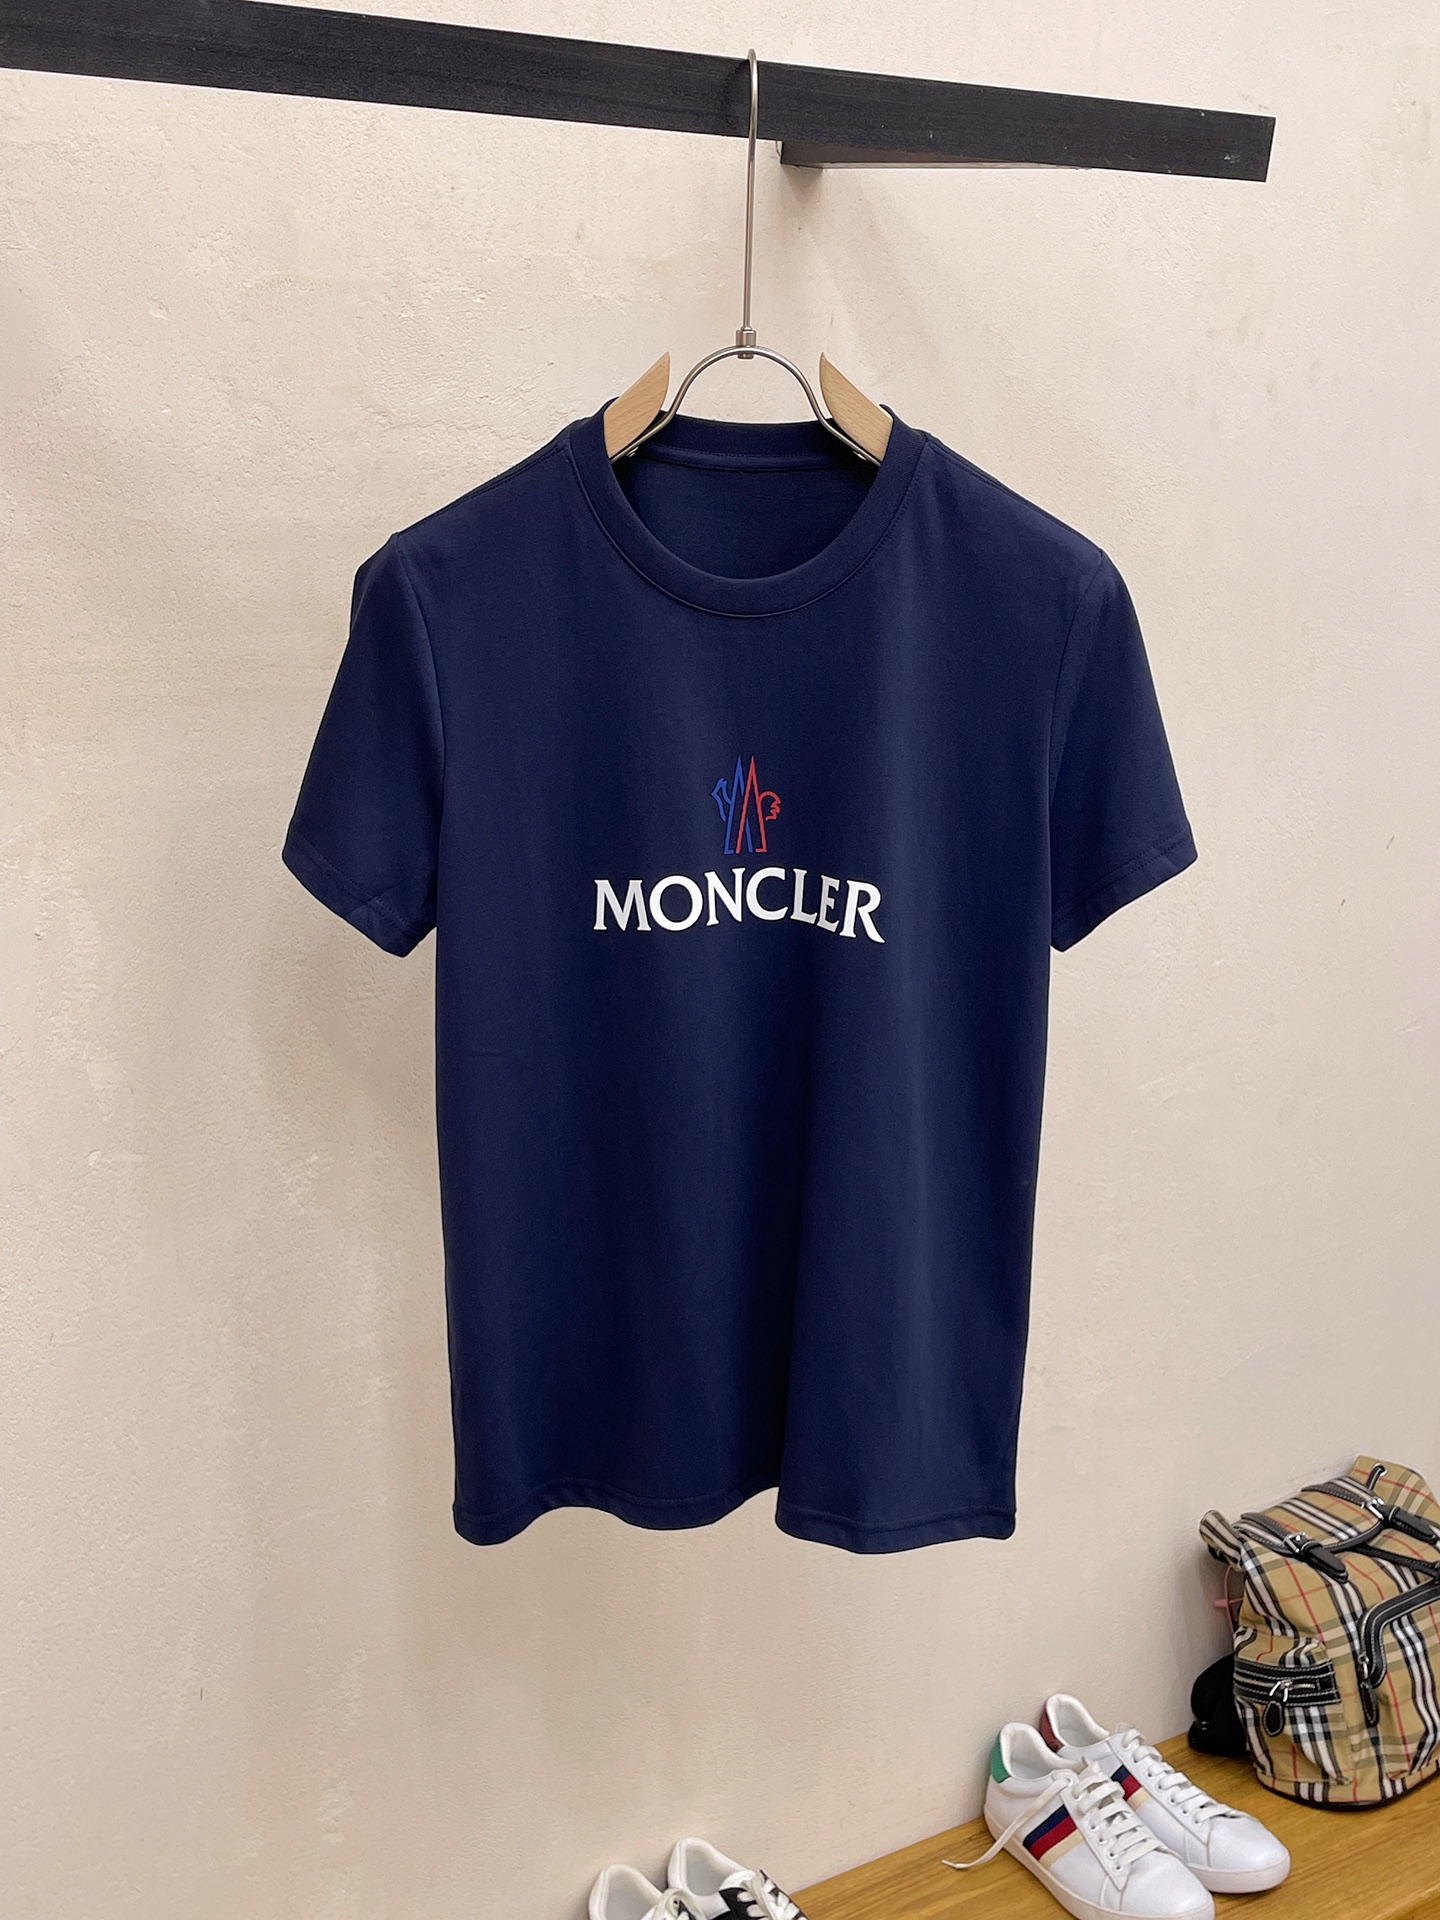 MO24最新款情侣款短袖T恤品牌新元素字母logo面料上身舒适透气不僵硬修身的剪裁采用定制面料.上身舒适